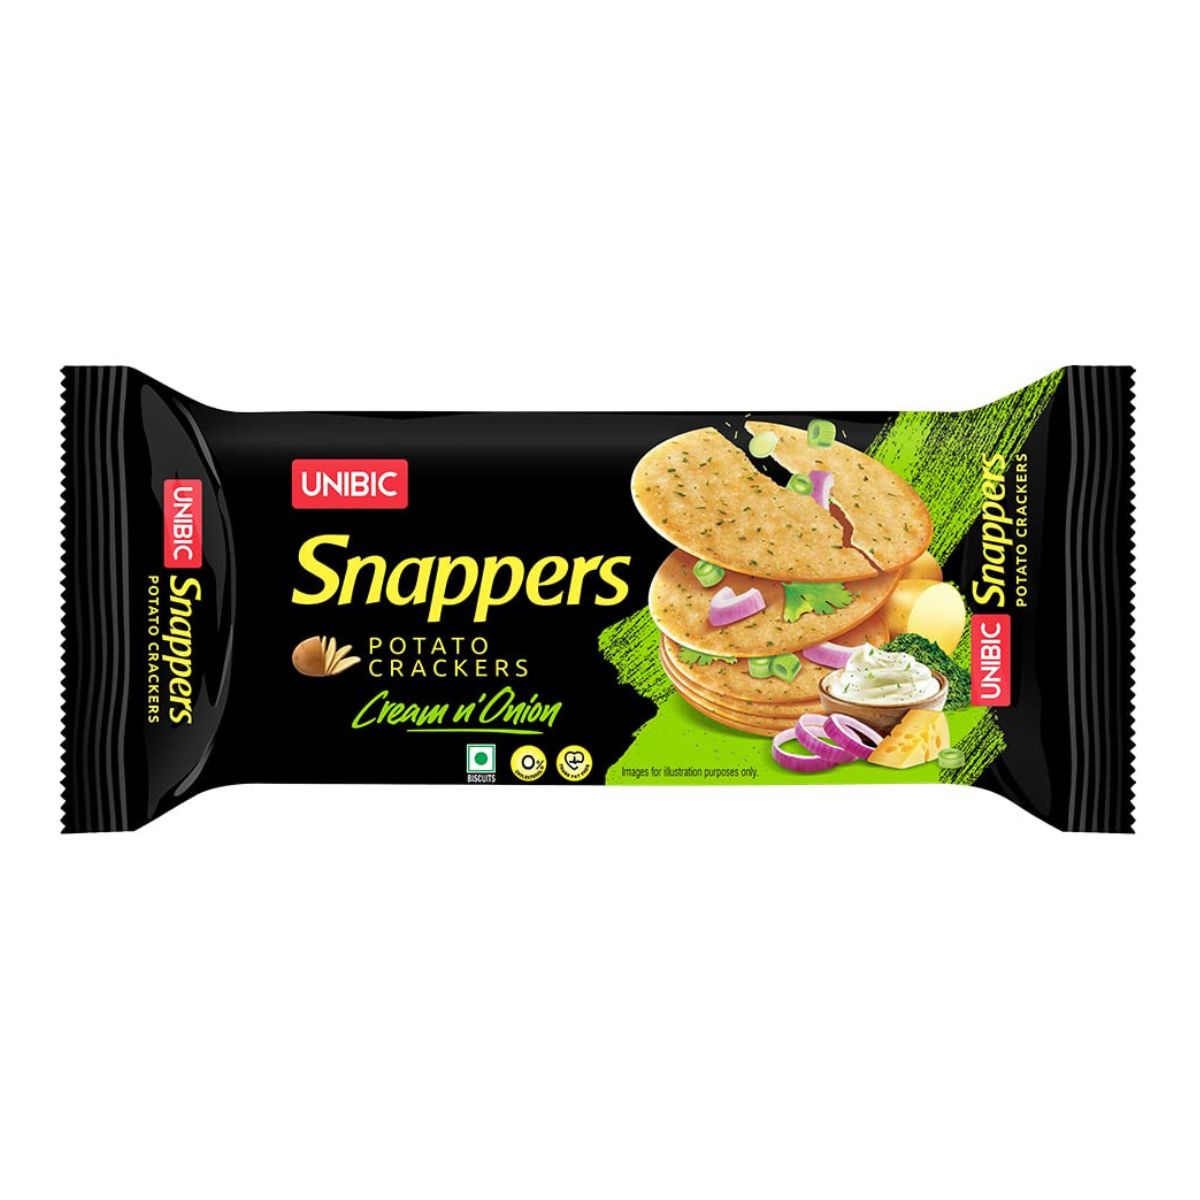 Unibic - Snappers Potato Crackers - Cream n' Onion - 300g